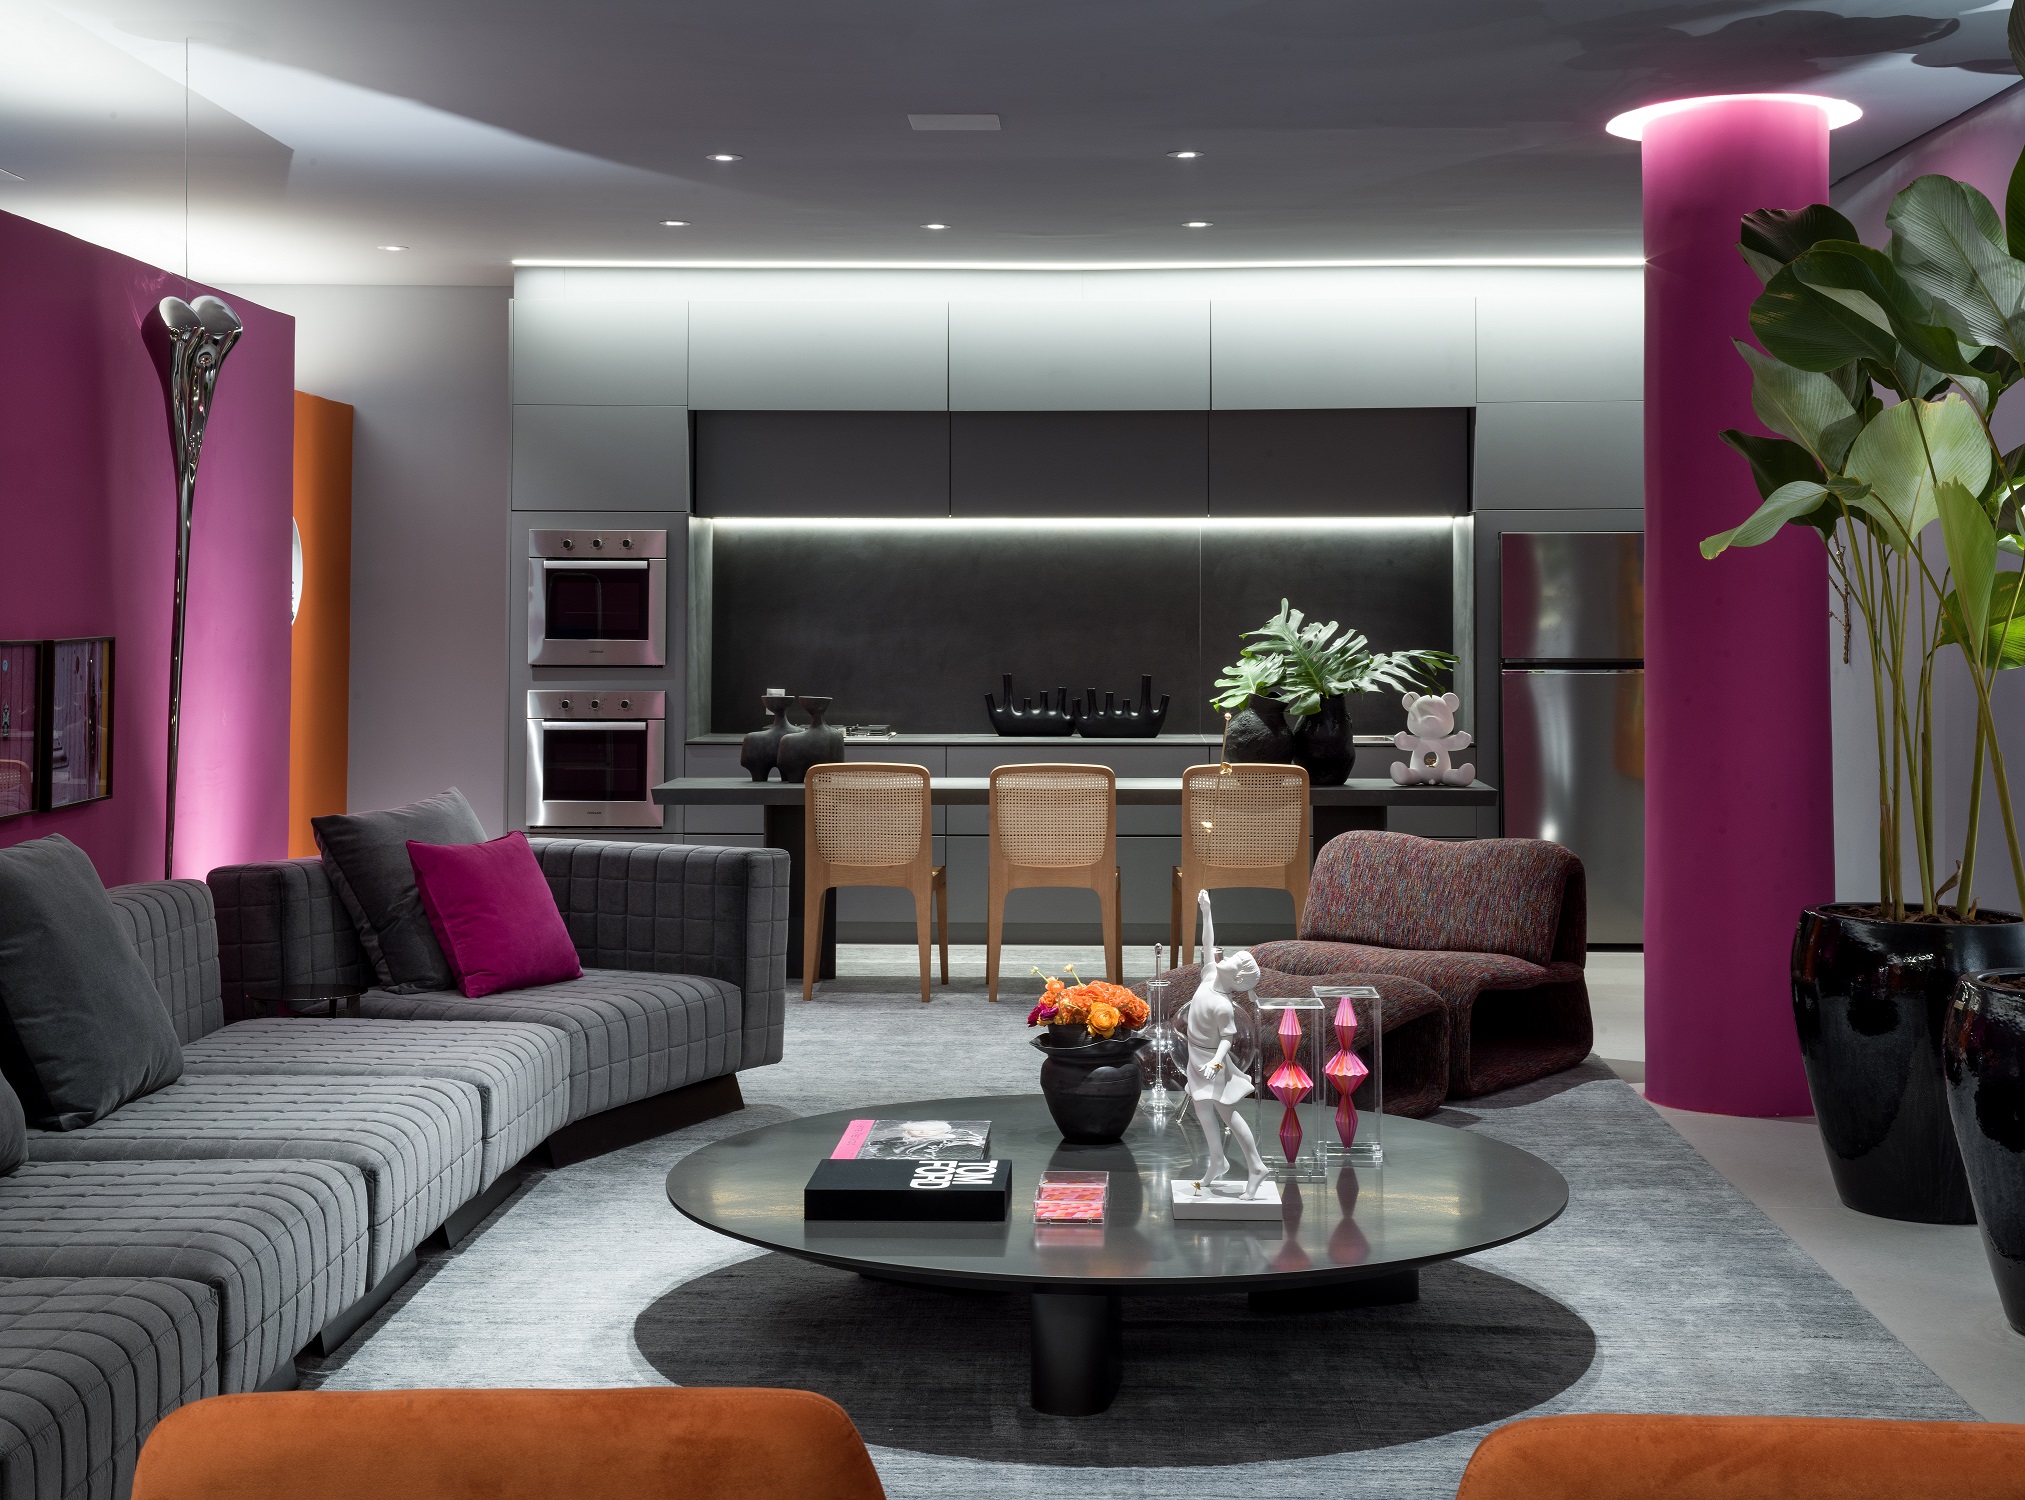 Sala integrada com cozinha; sofá cinza, tapete cinza, poltronas laranjas e marcenaria cinza.